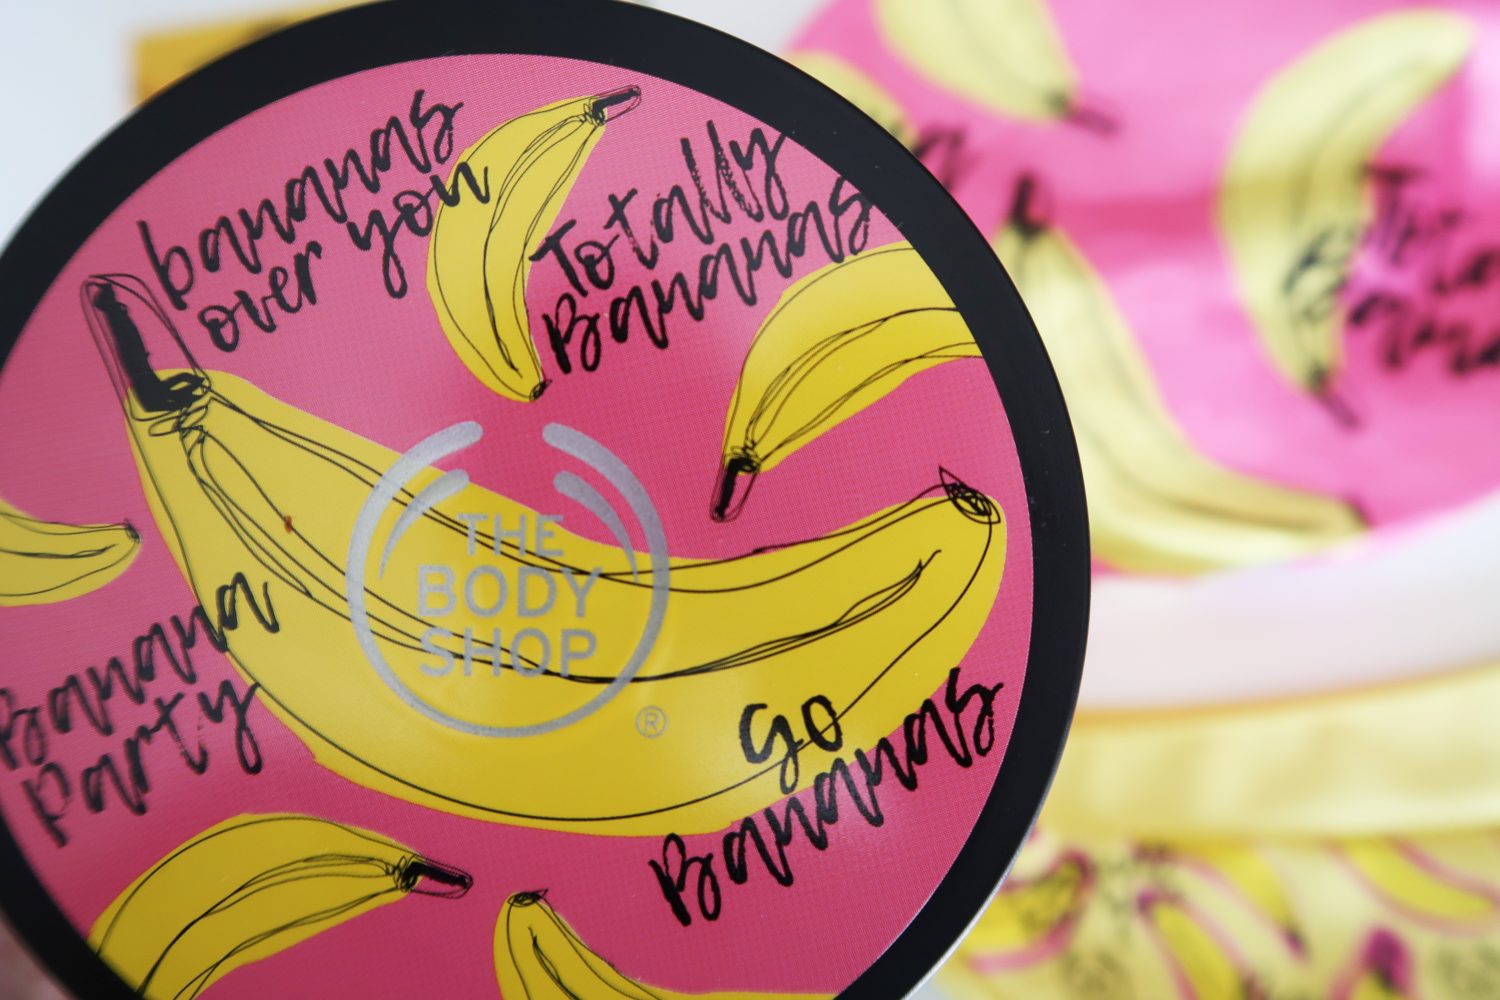 Review: The Body Shop Banana